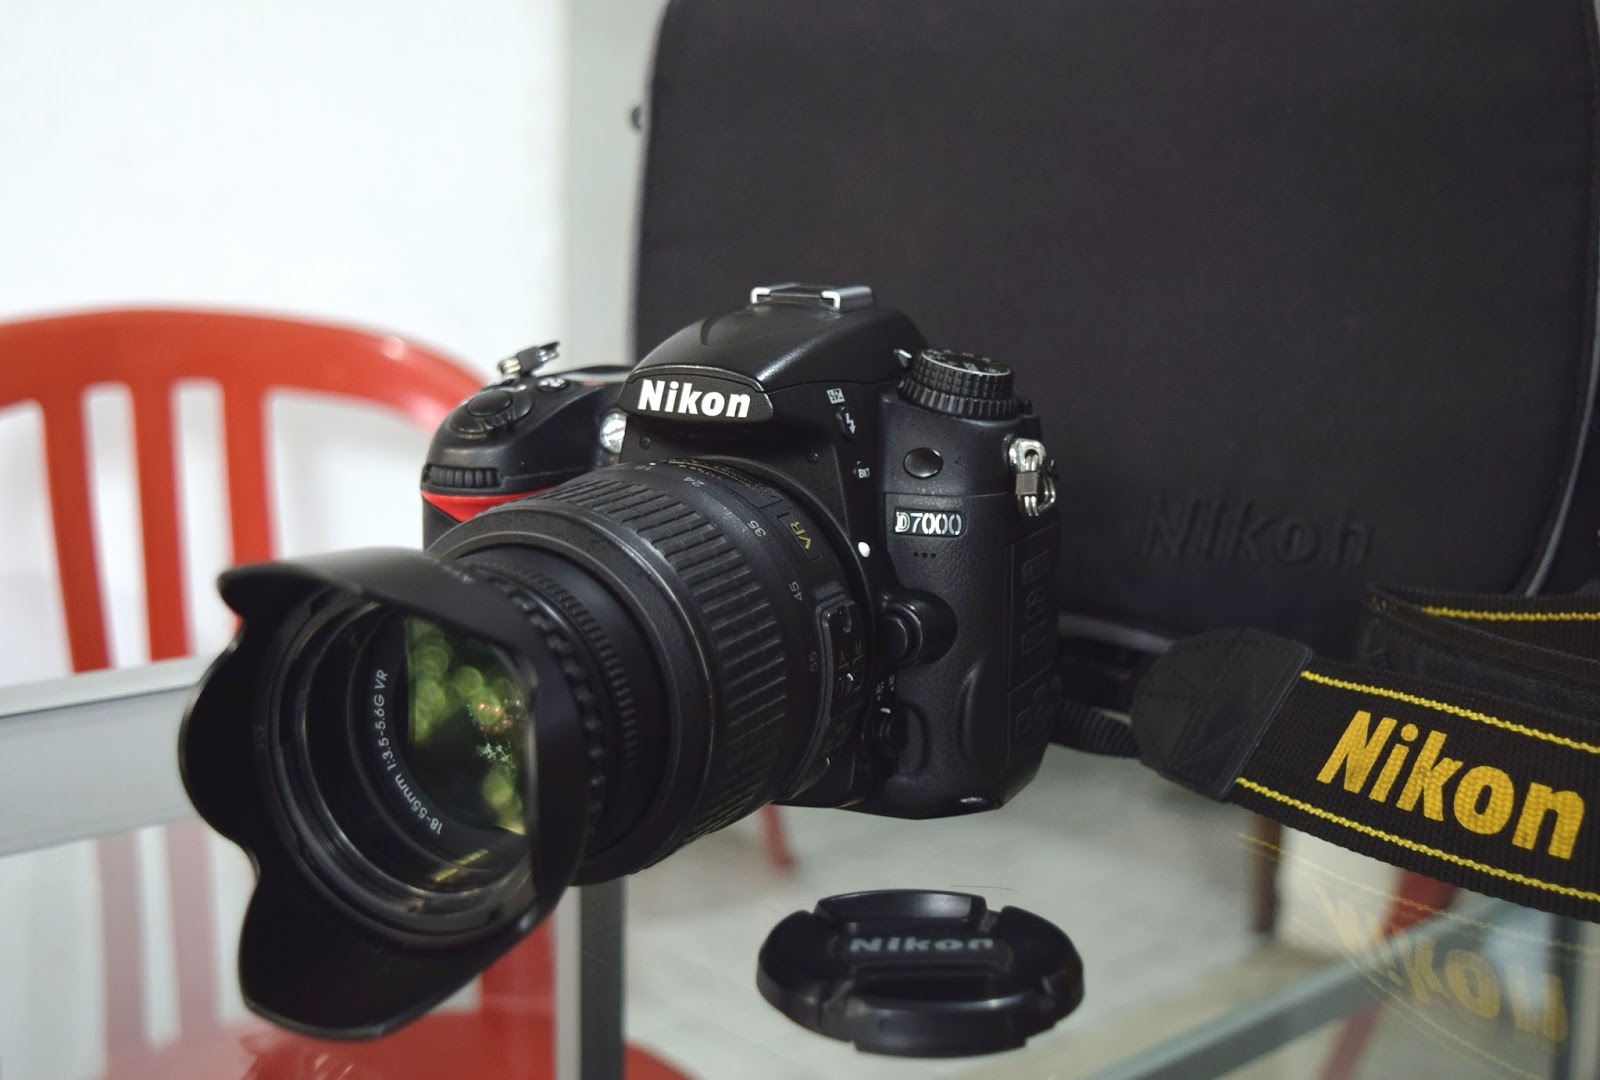  Jual  Nikon D7000 Lensa Di Malang  Jual  Beli Laptop 